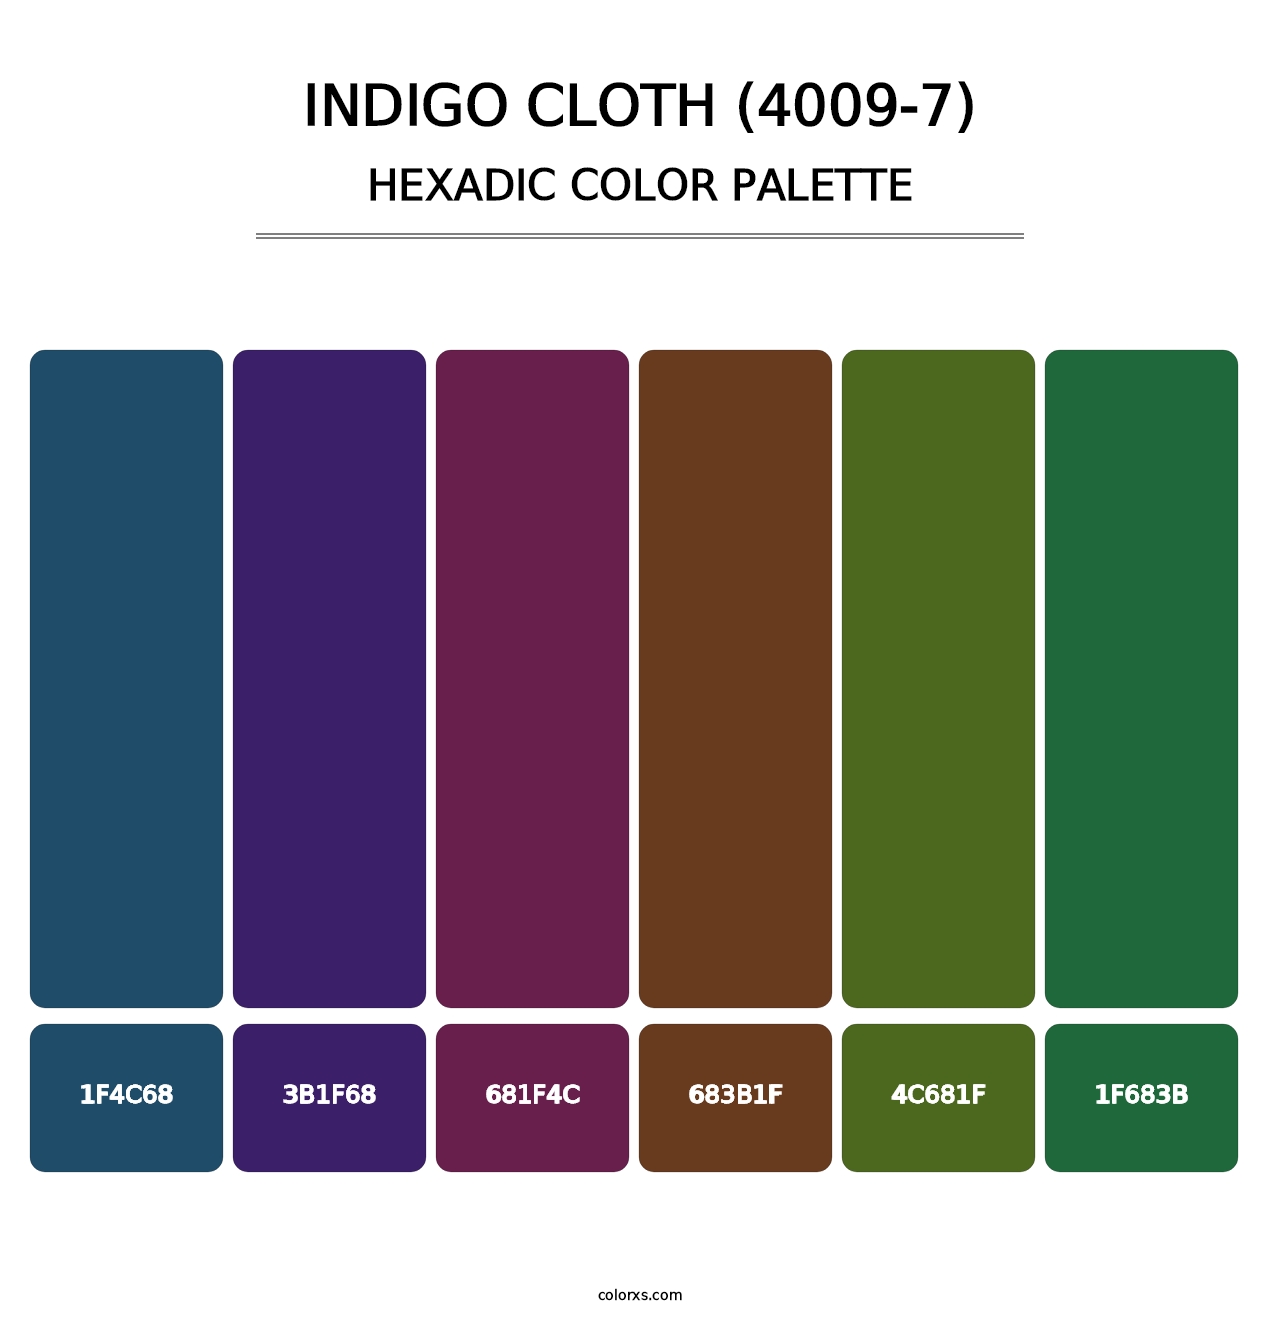 Indigo Cloth (4009-7) - Hexadic Color Palette